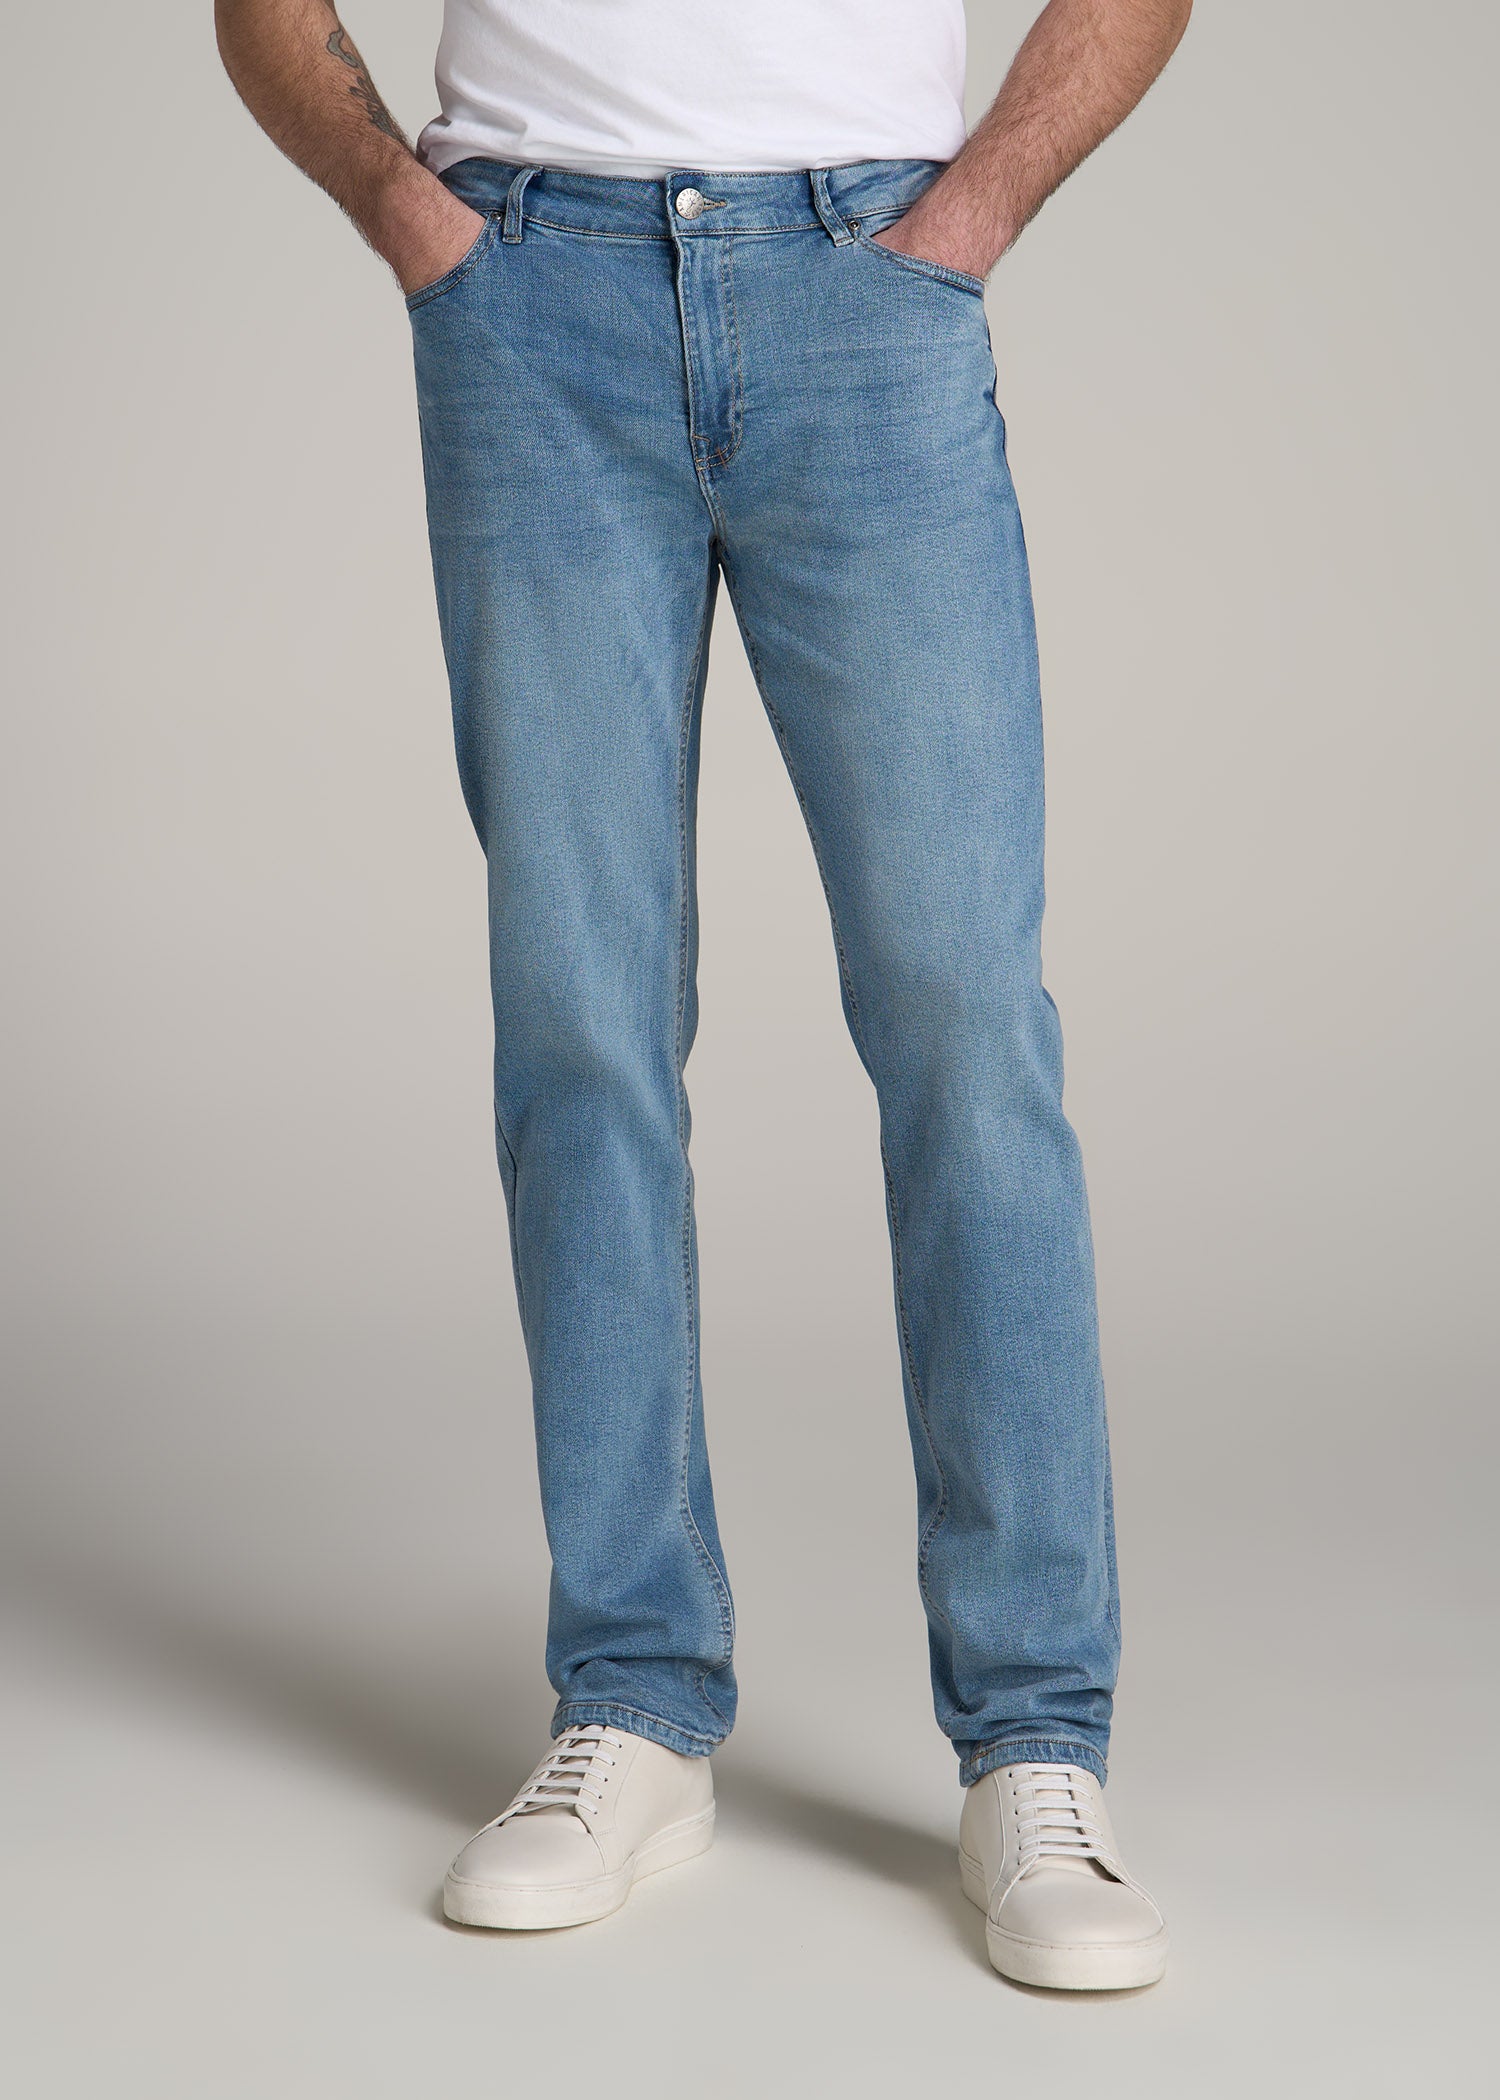 Men's Straight Fit Jeans